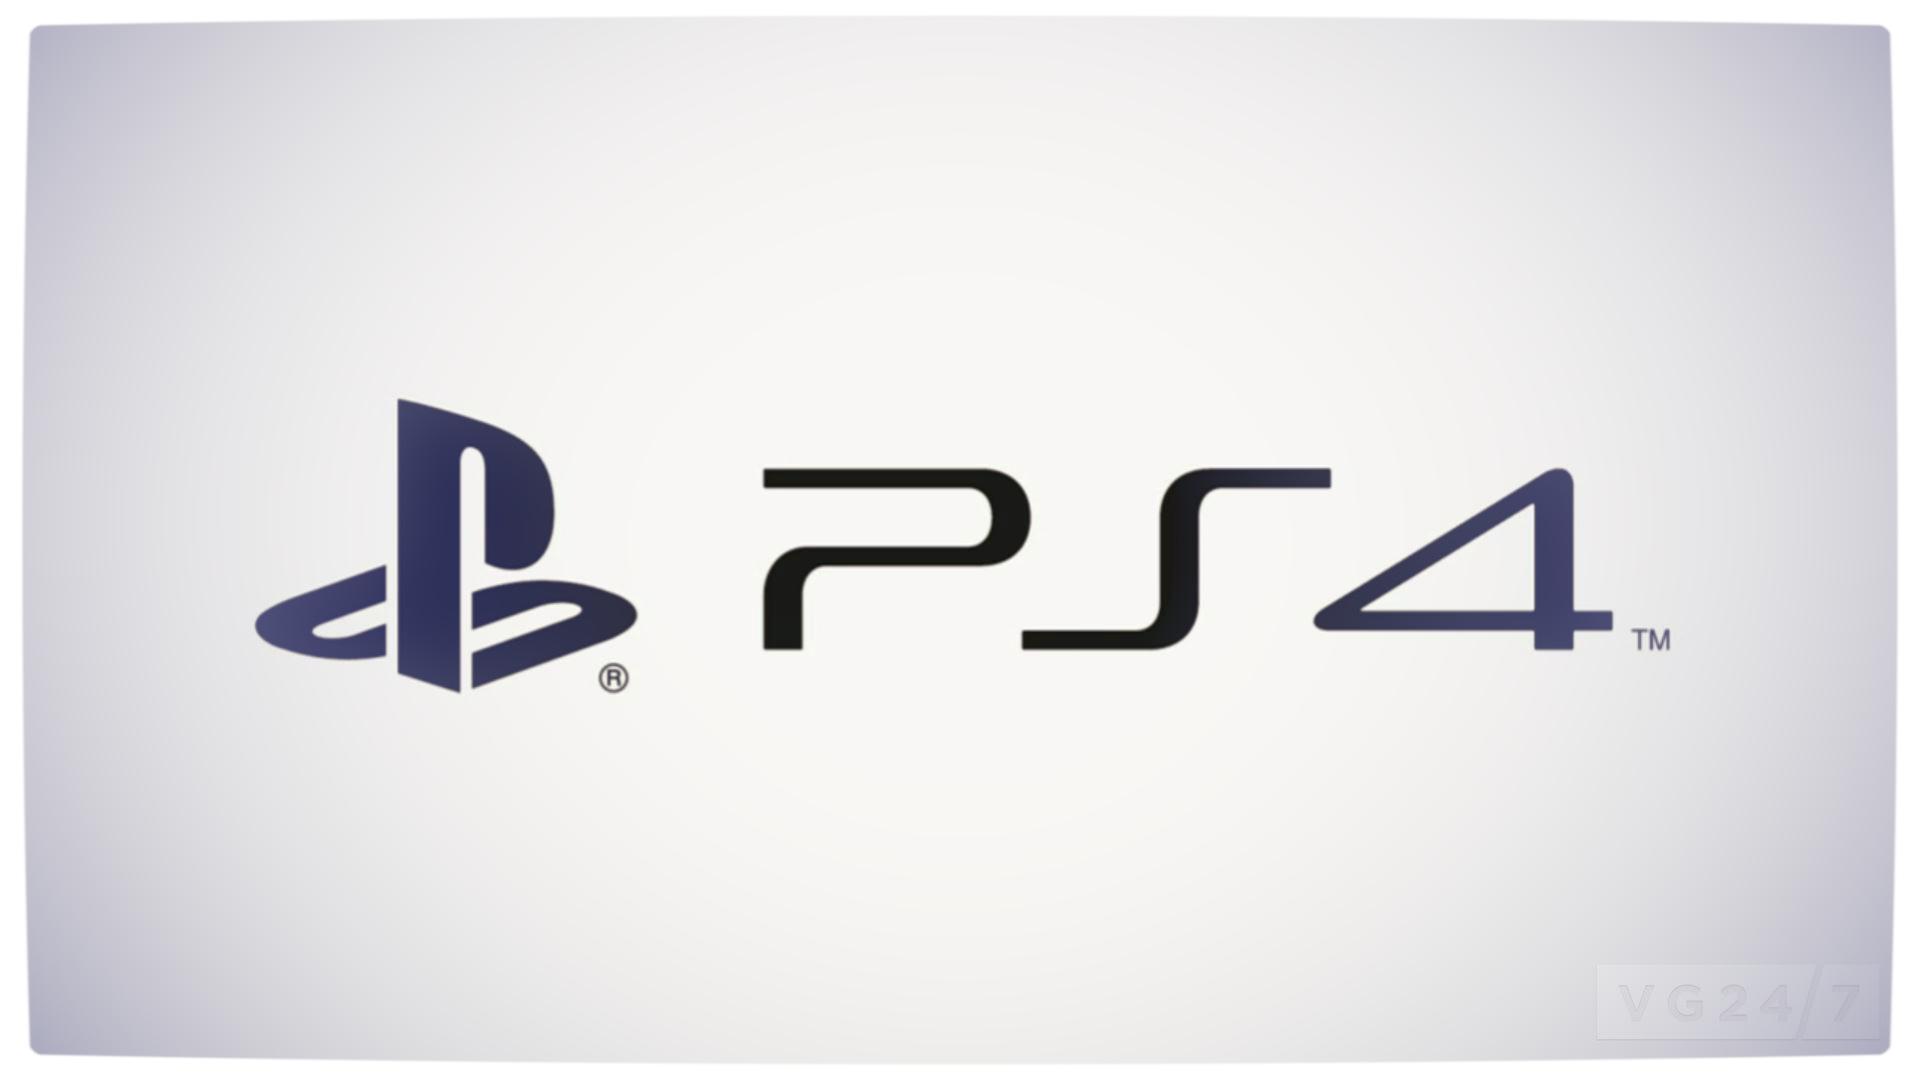 Playstation Logo Png HD Wallpaper, Background Image